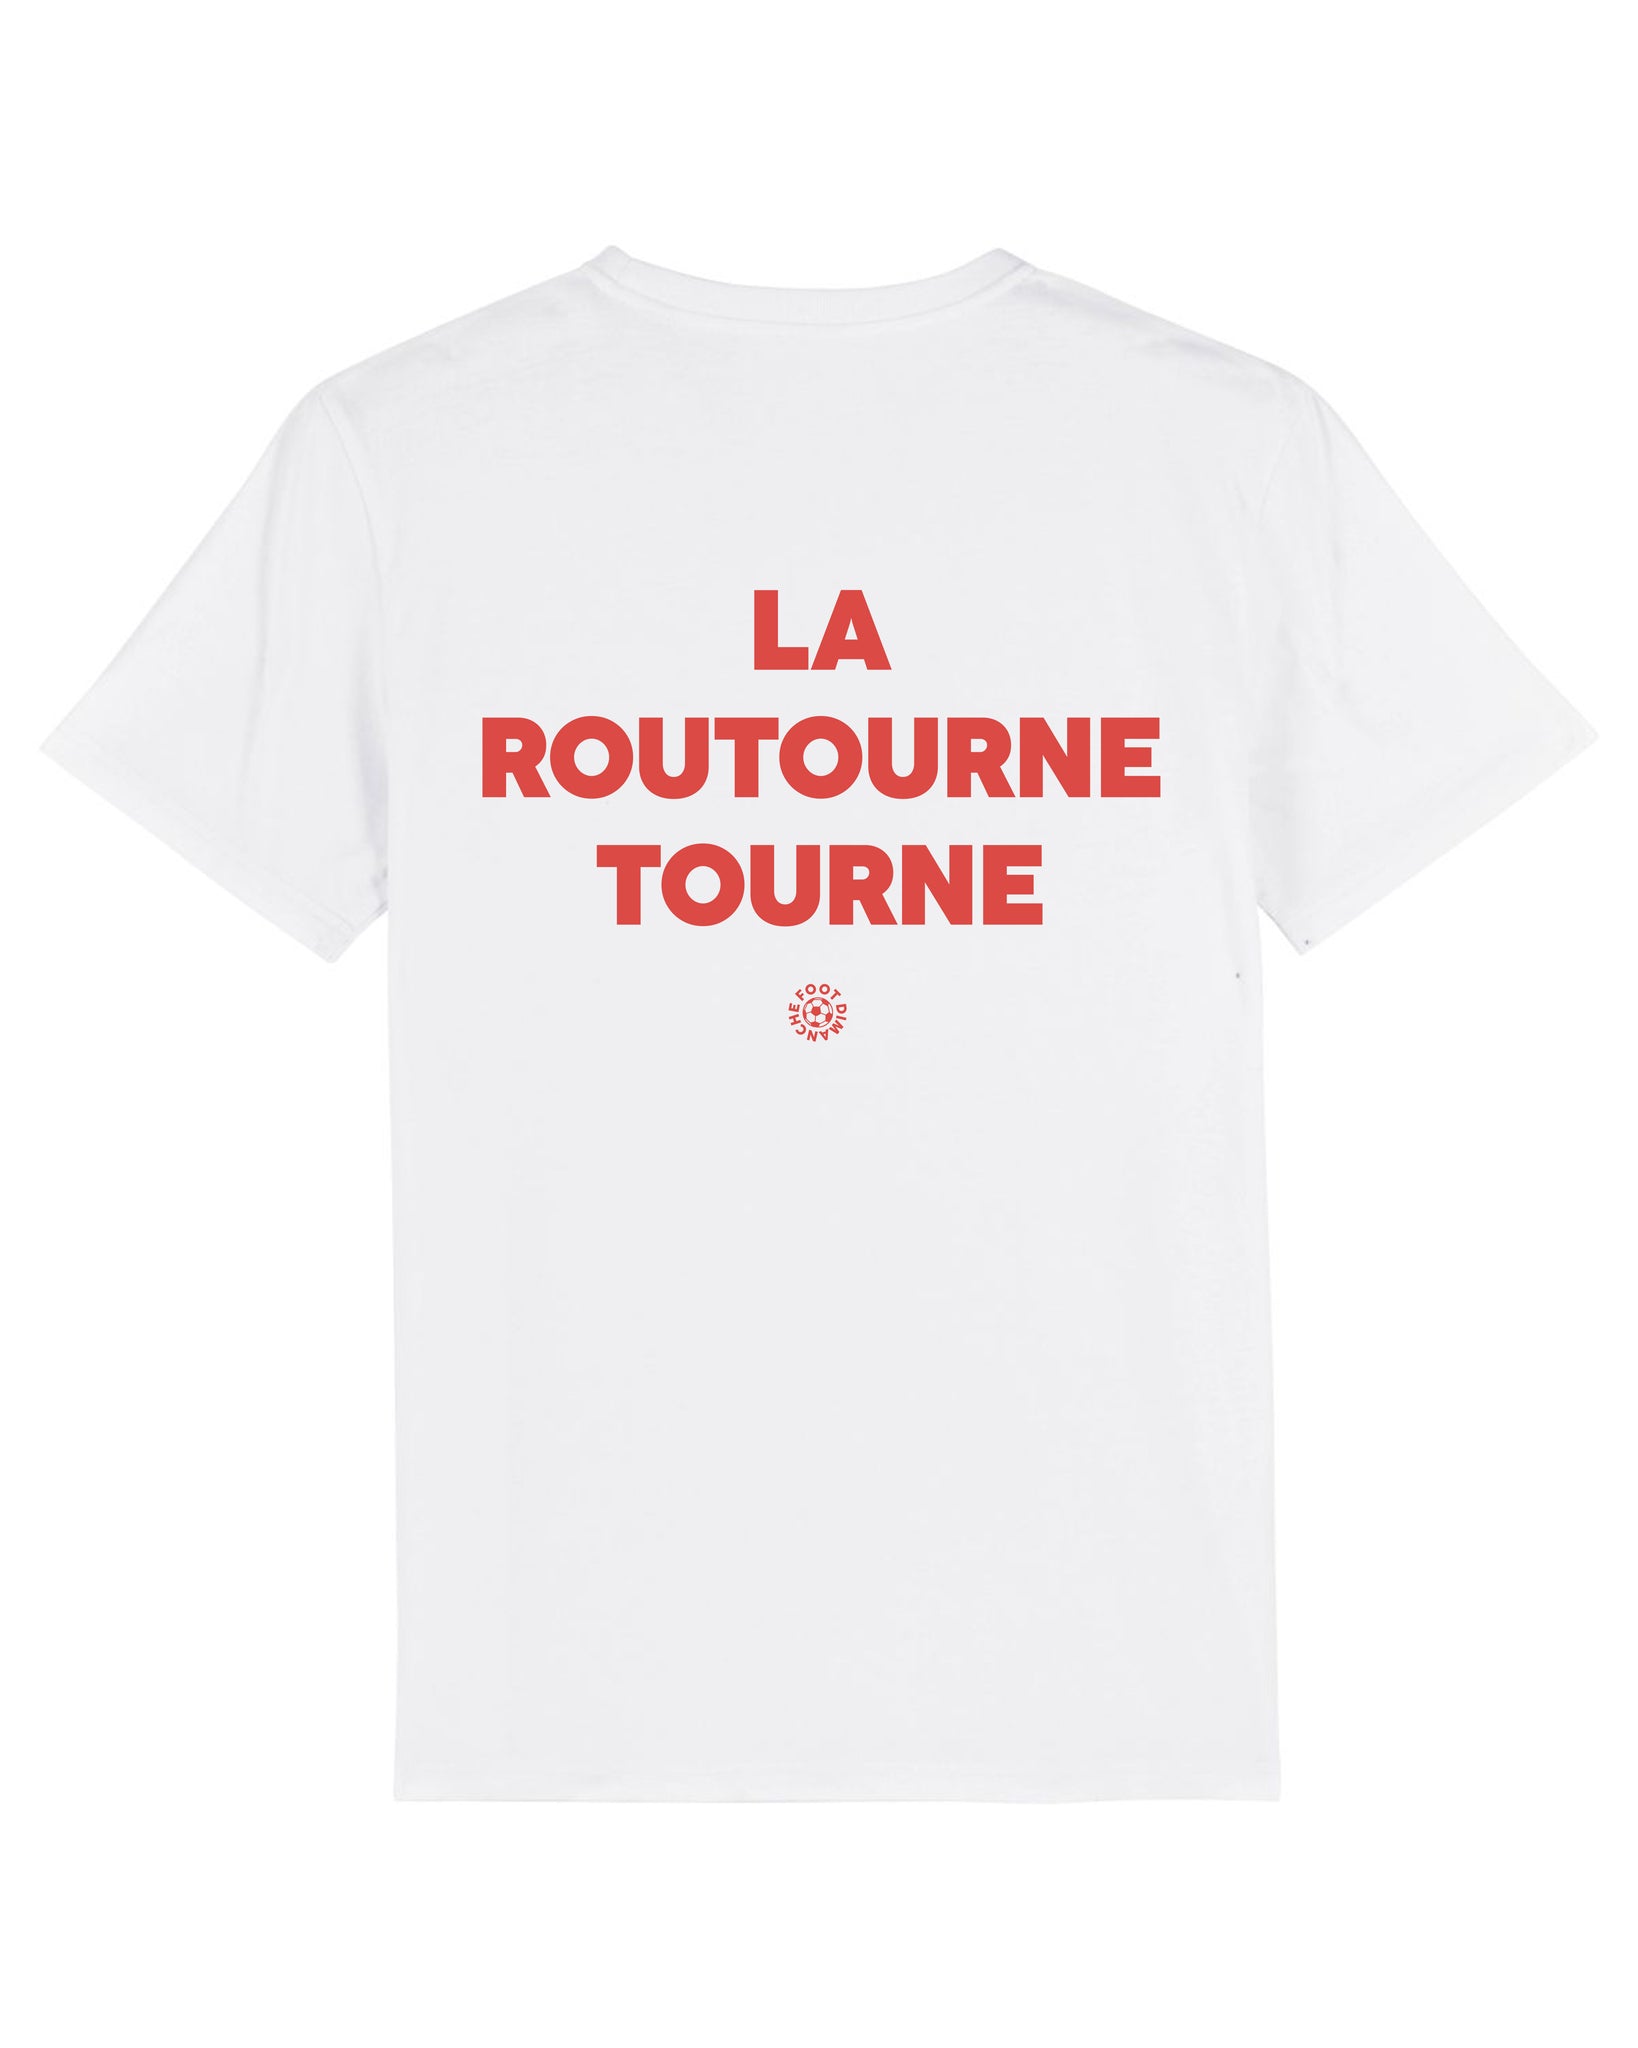 Tee Shirt La Routourne tourne